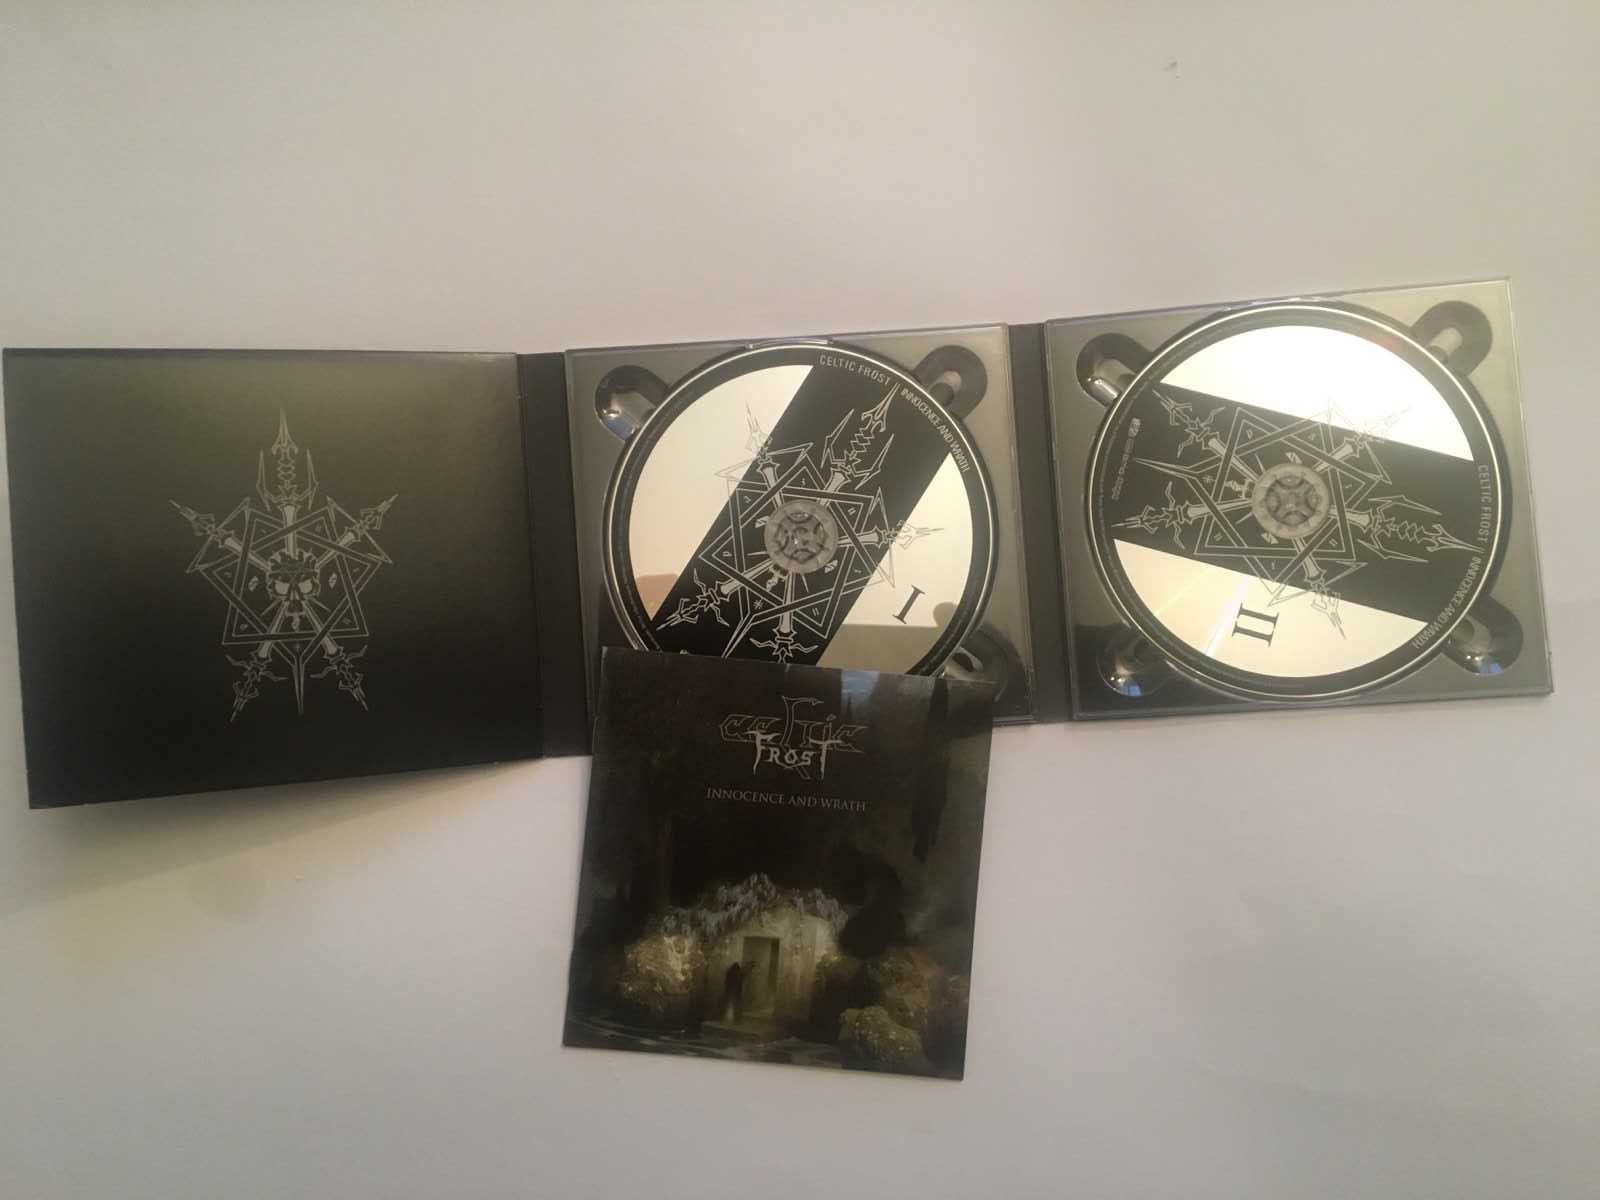 Продам аудио CD Celtic Frost – Innocence And Wrath